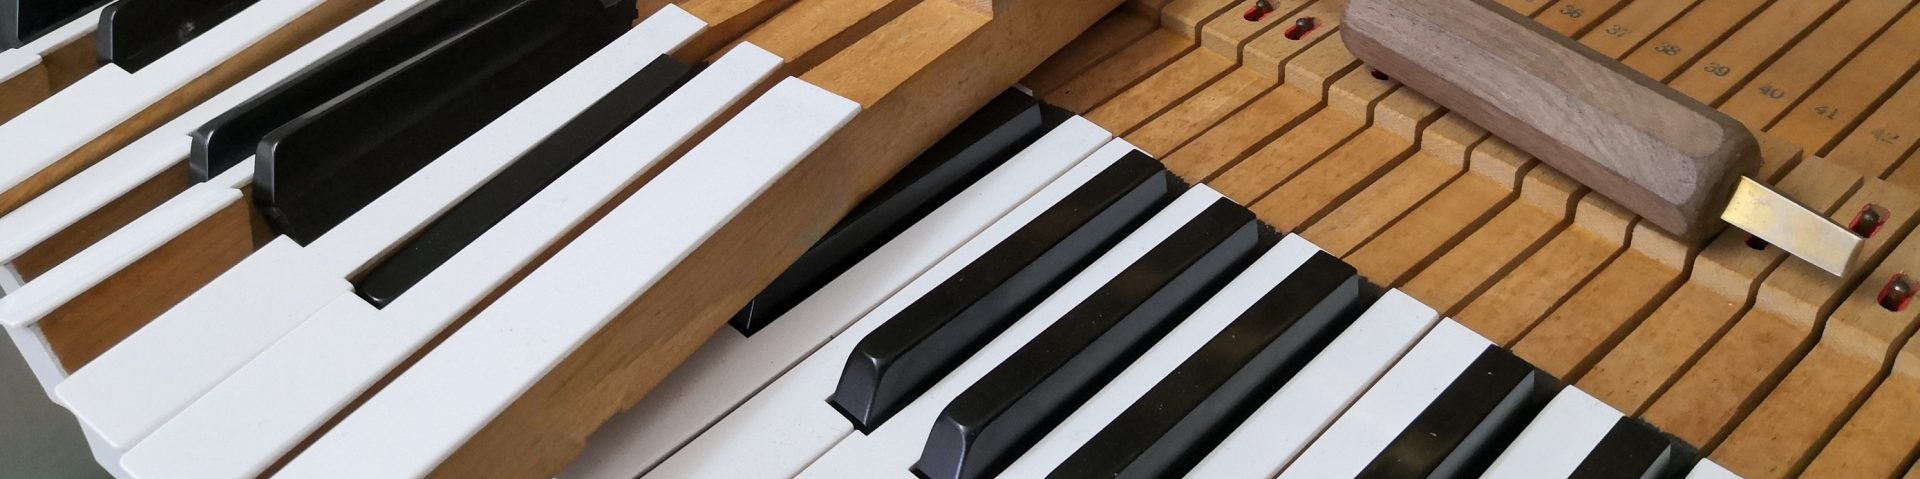 Auburn Pianos